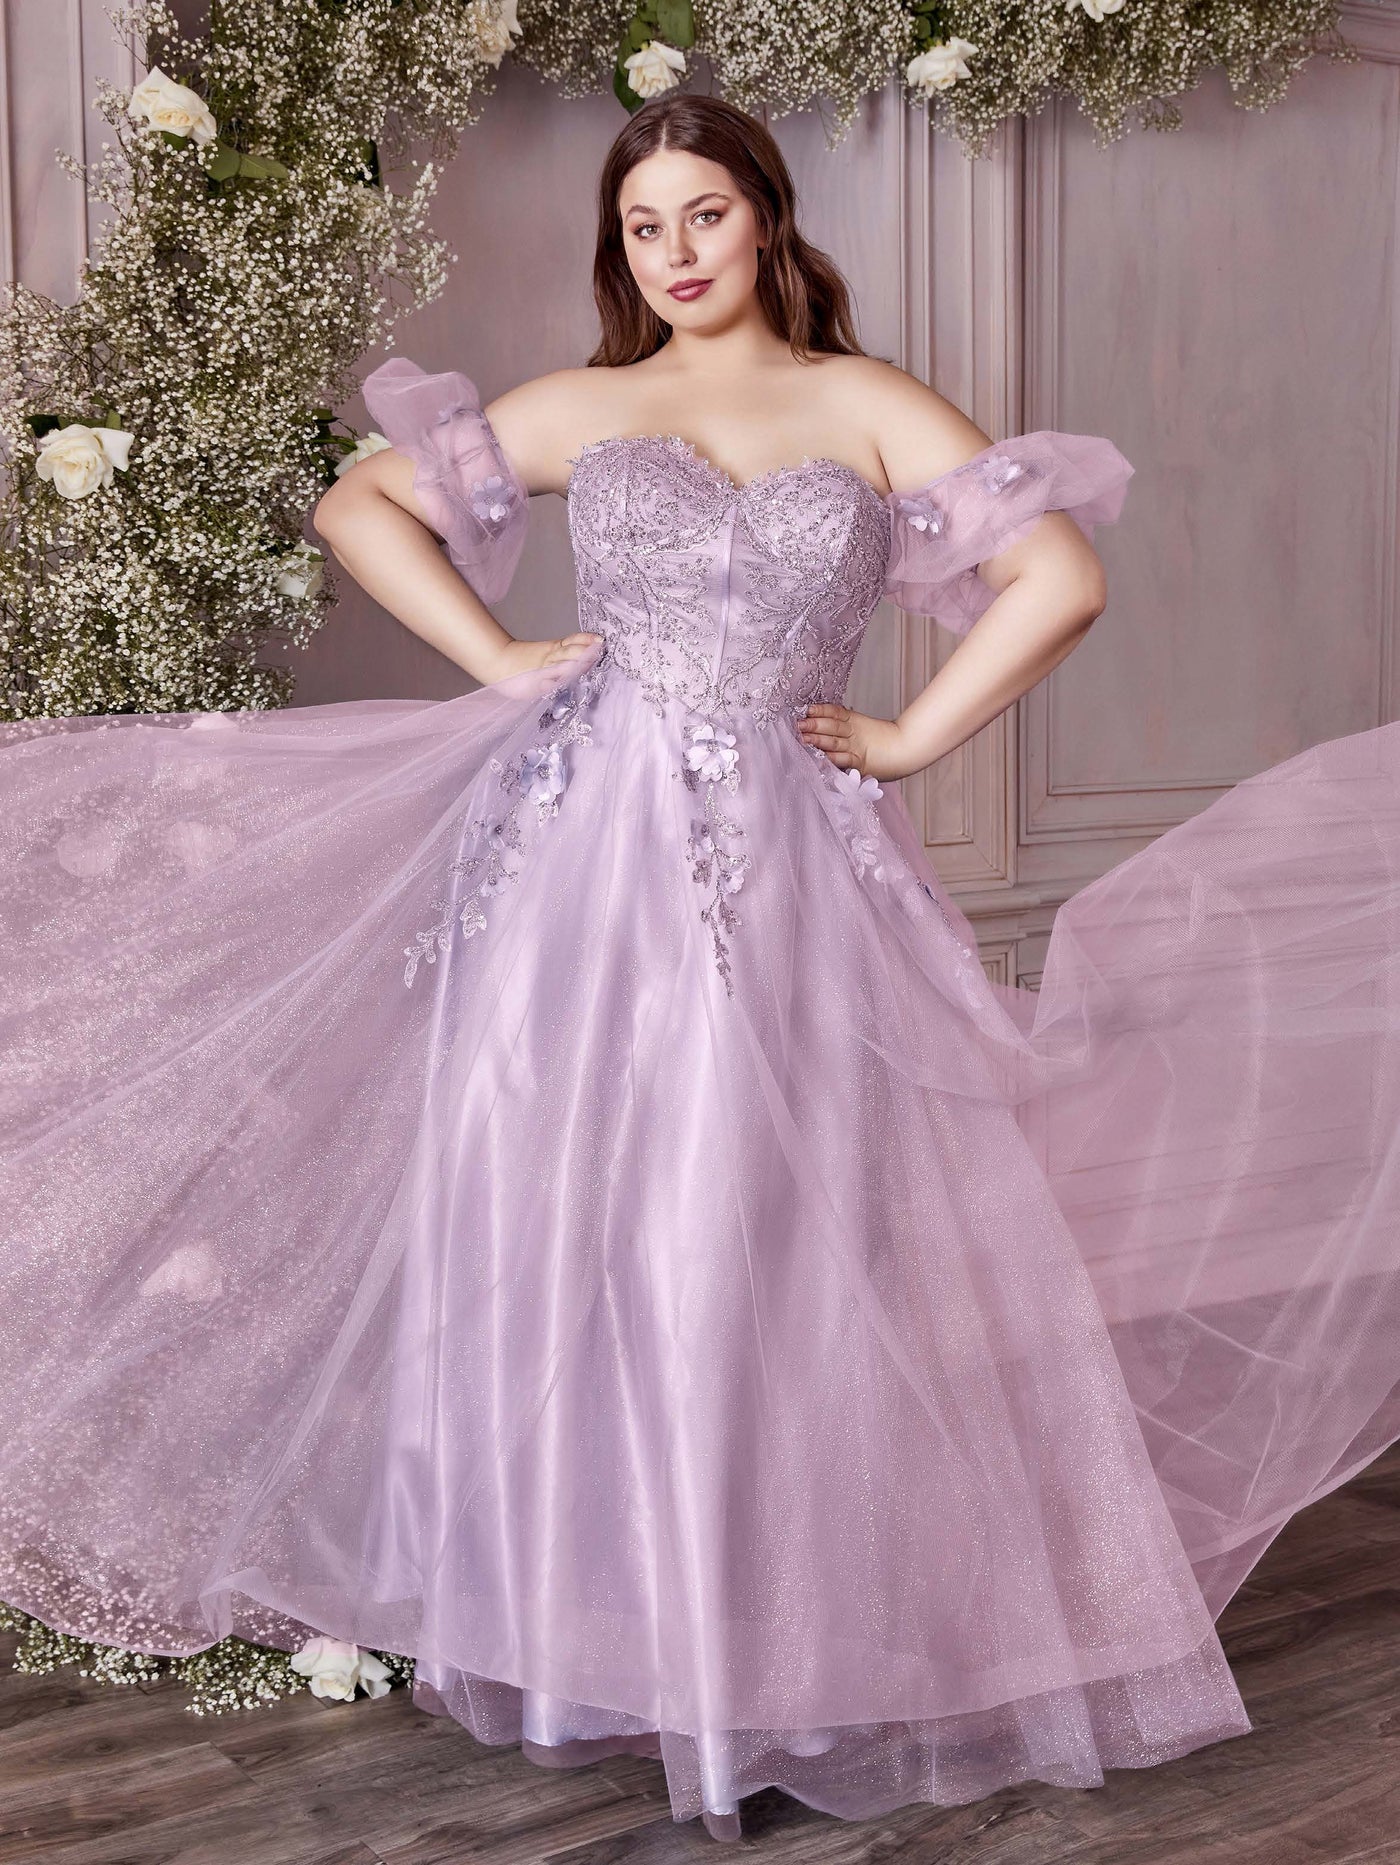 Cinderella Divine CD0191C B Chic Fashions Long Dress Evening Gowns